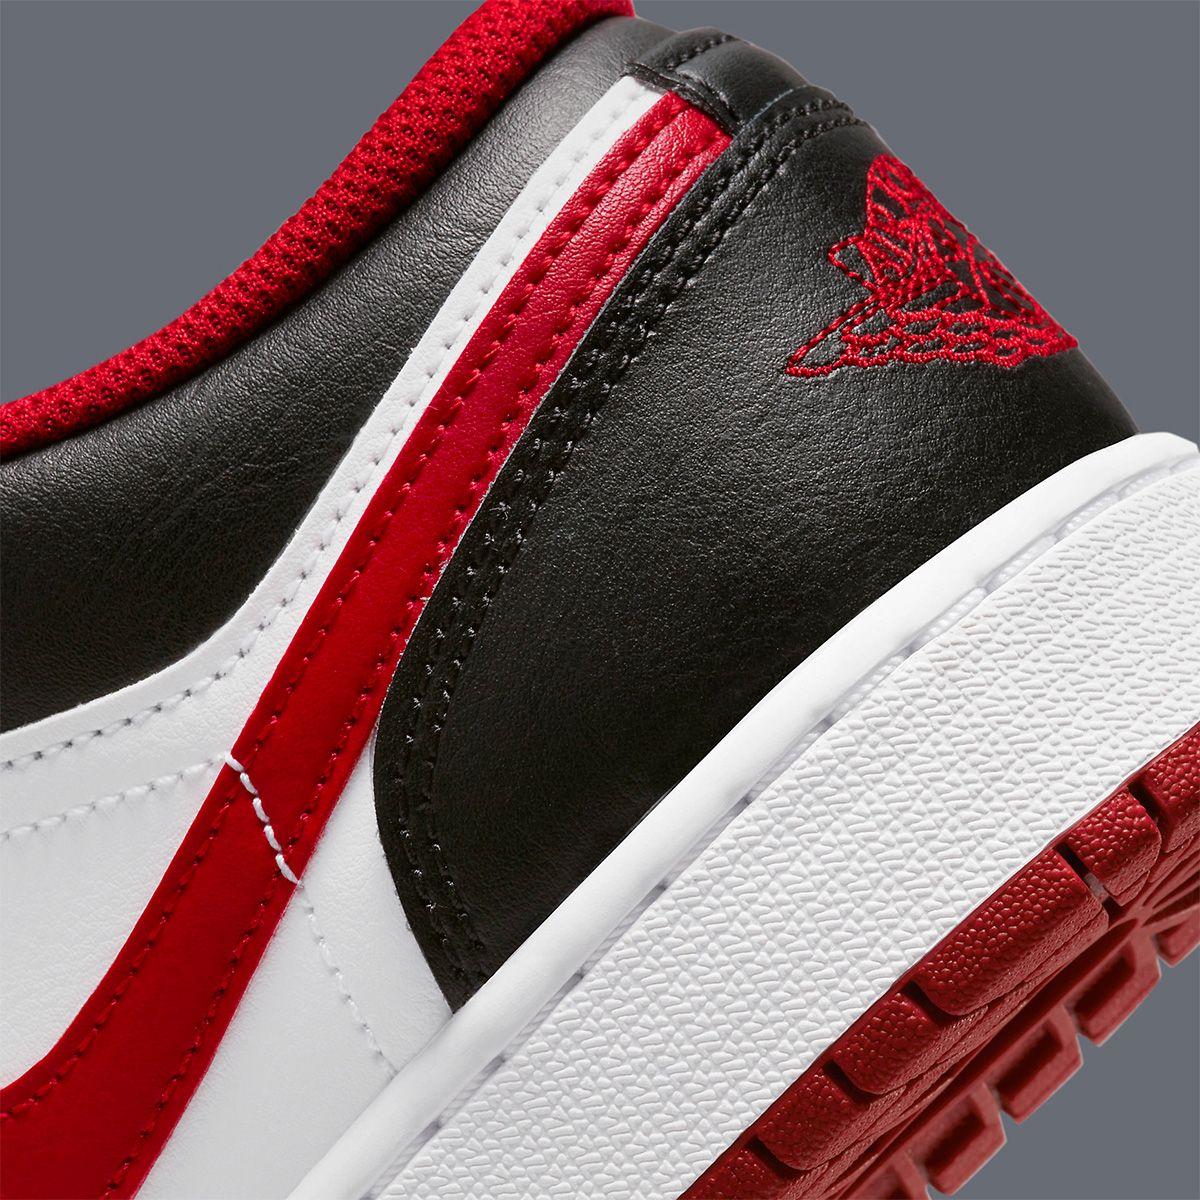 First Looks // Air Jordan 1 Low “Reverse Black Toe” | LaptrinhX / News